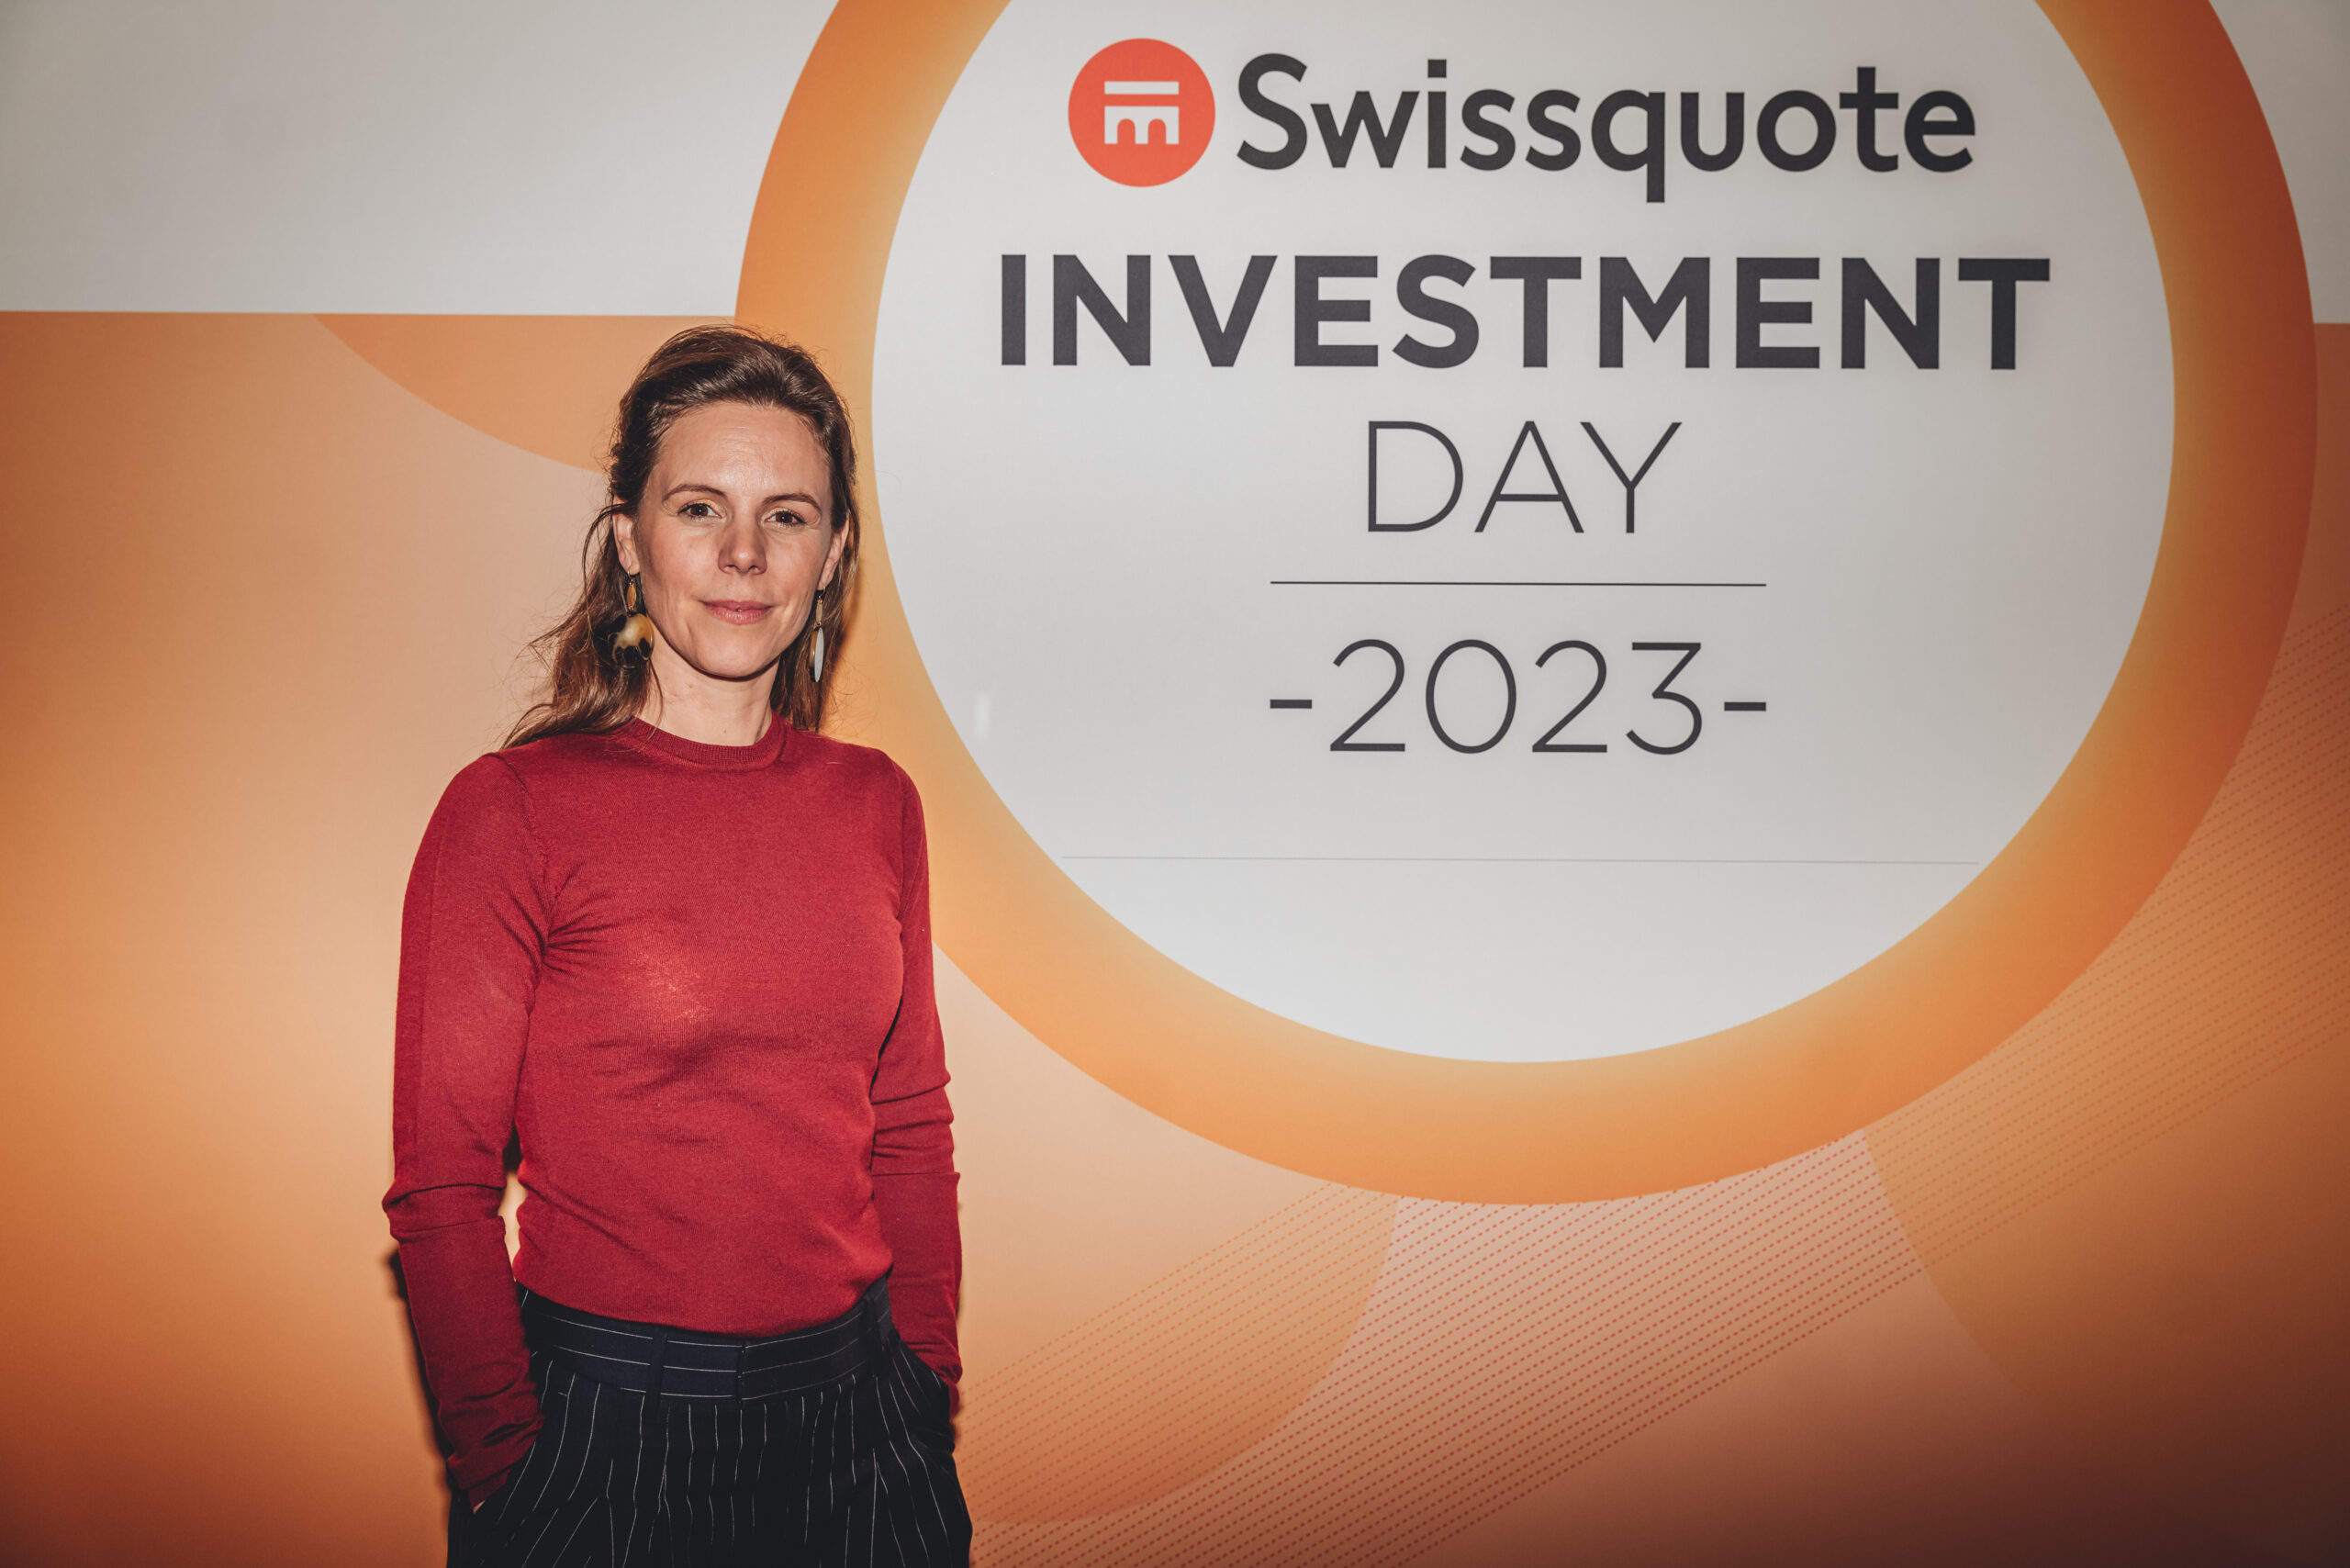 Swissquote Investment day